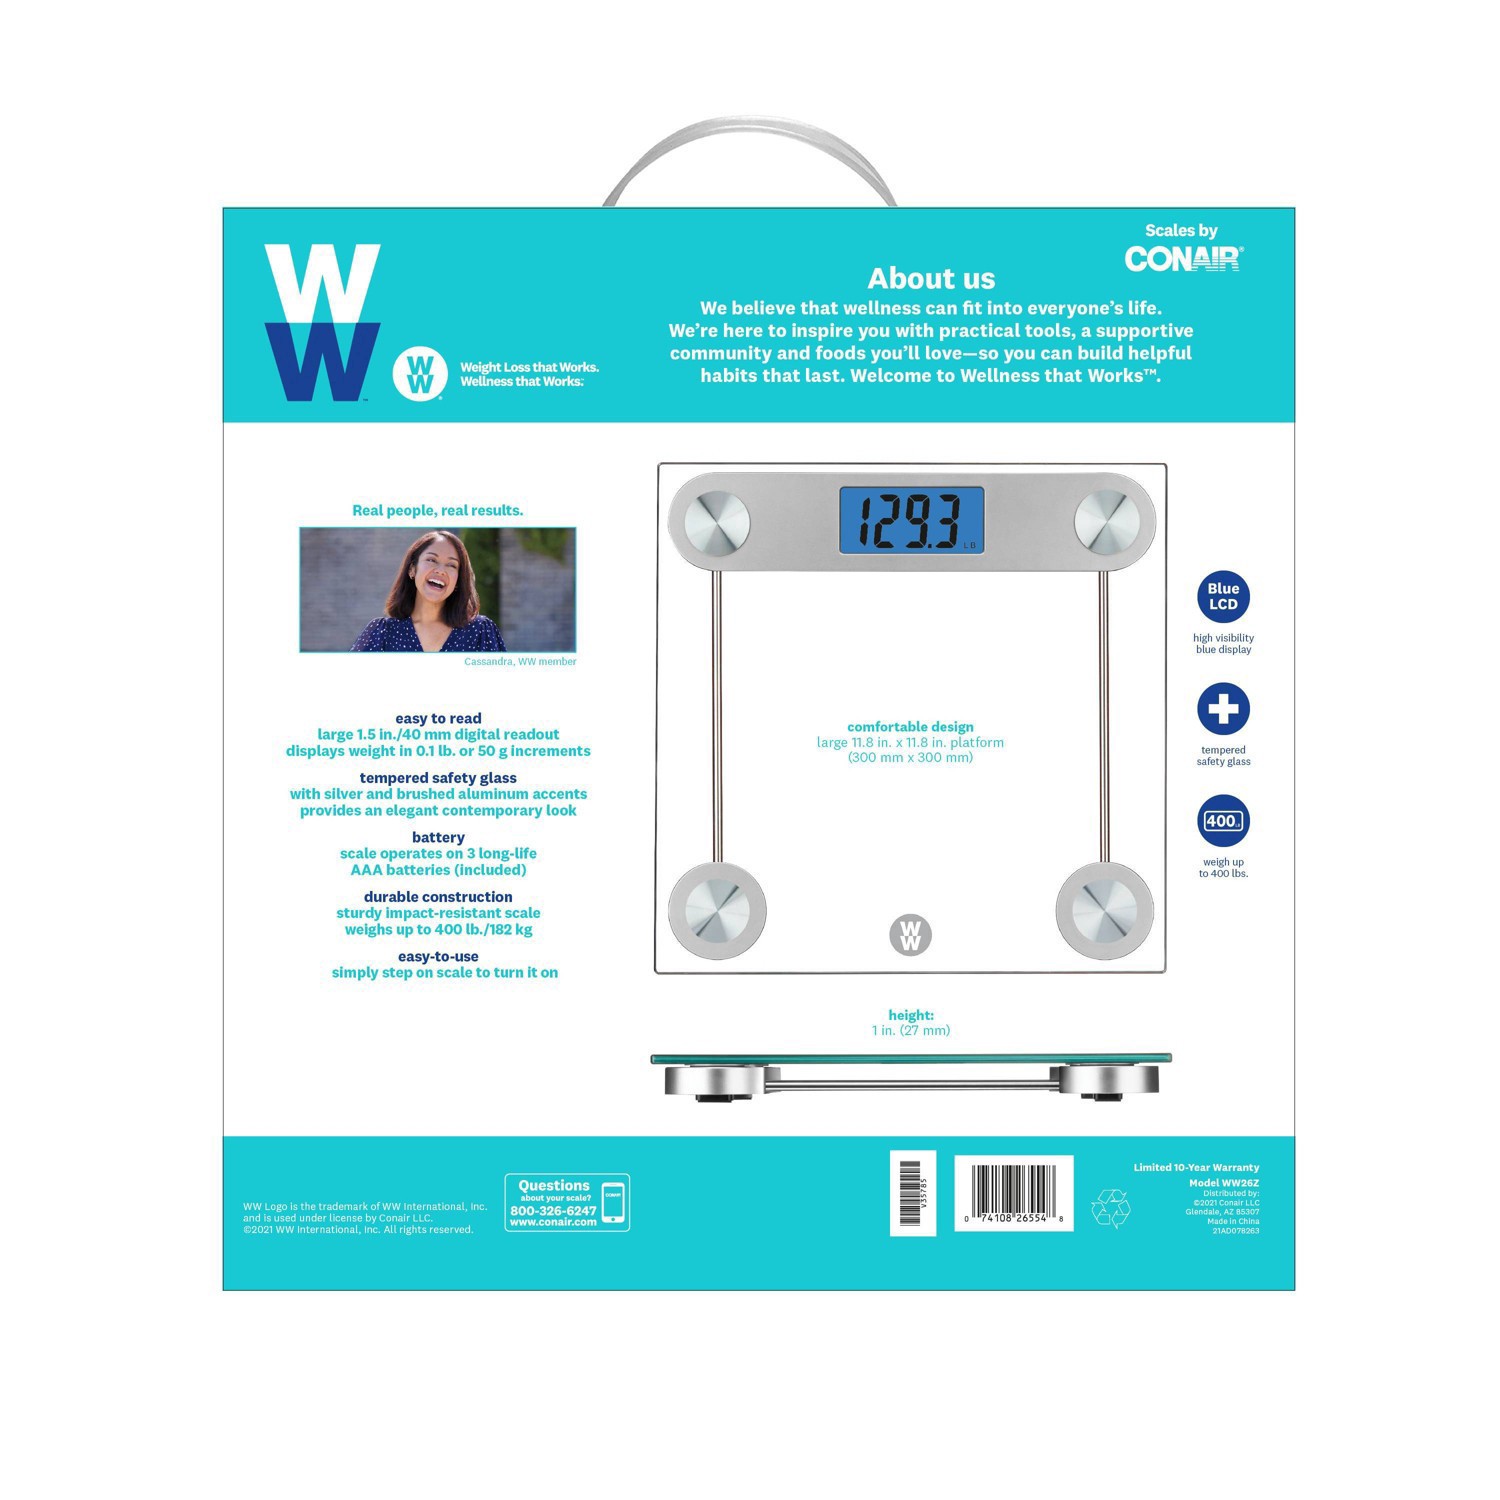 Weight Watchers Digital Glass Scale